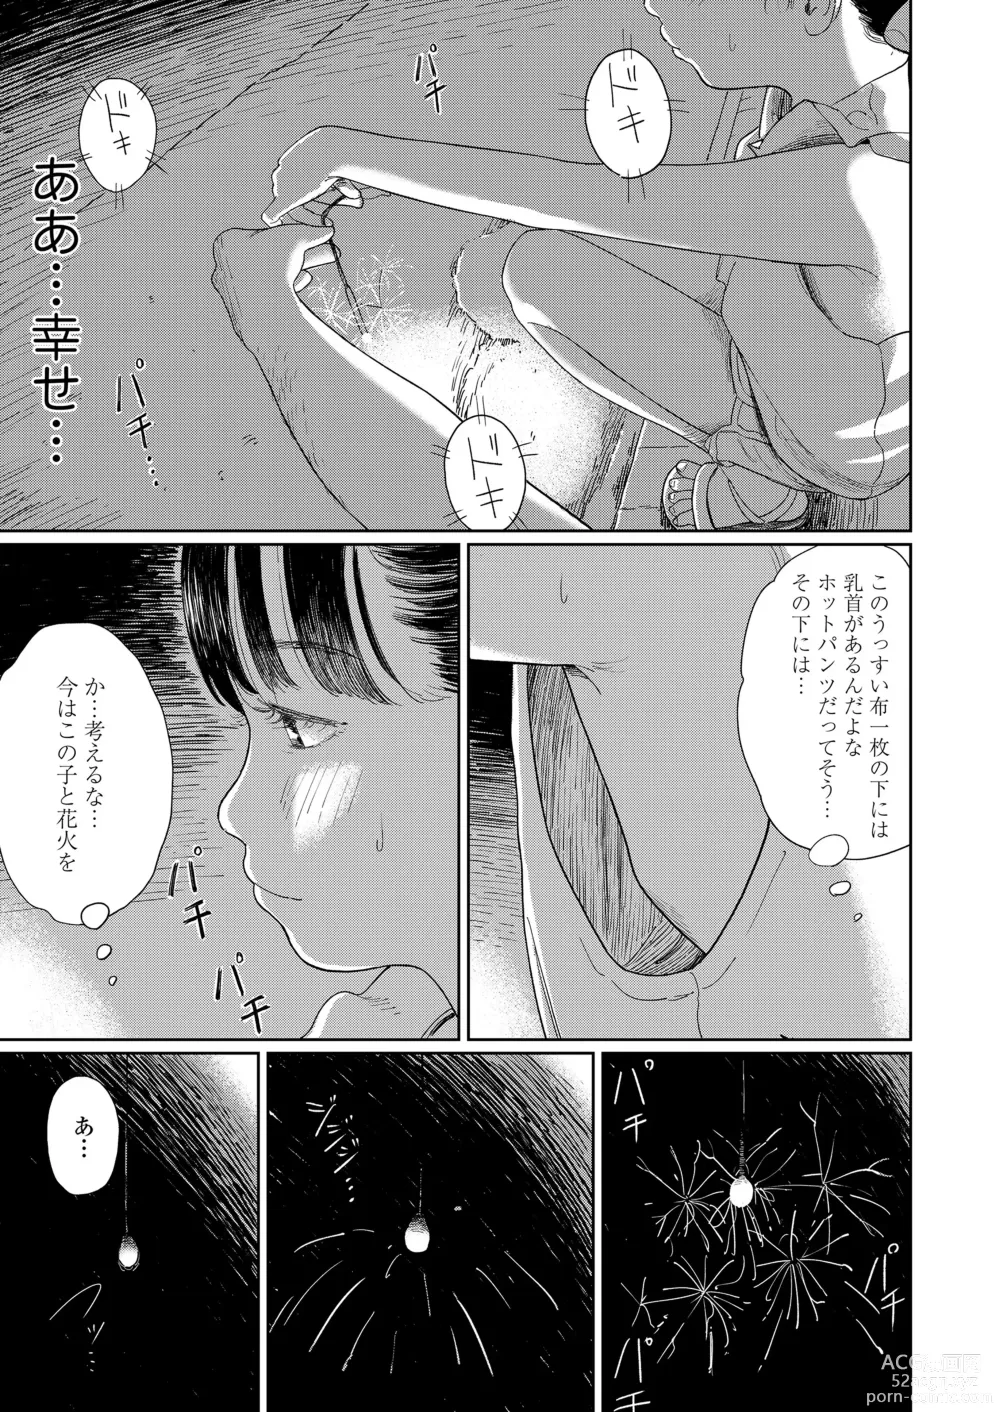 Page 13 of manga COMIC LOE VOL.4 NEXT